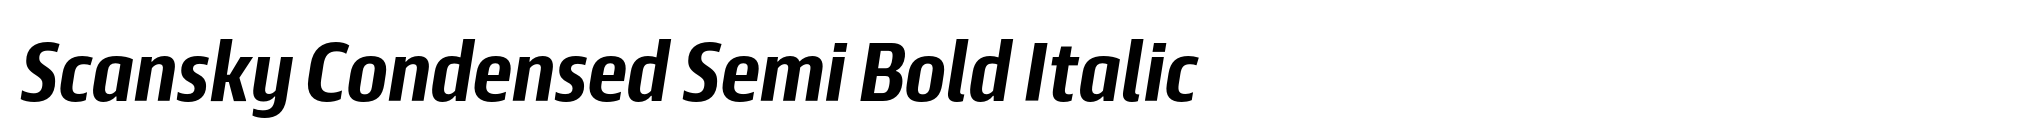 Scansky Condensed Semi Bold Italic image